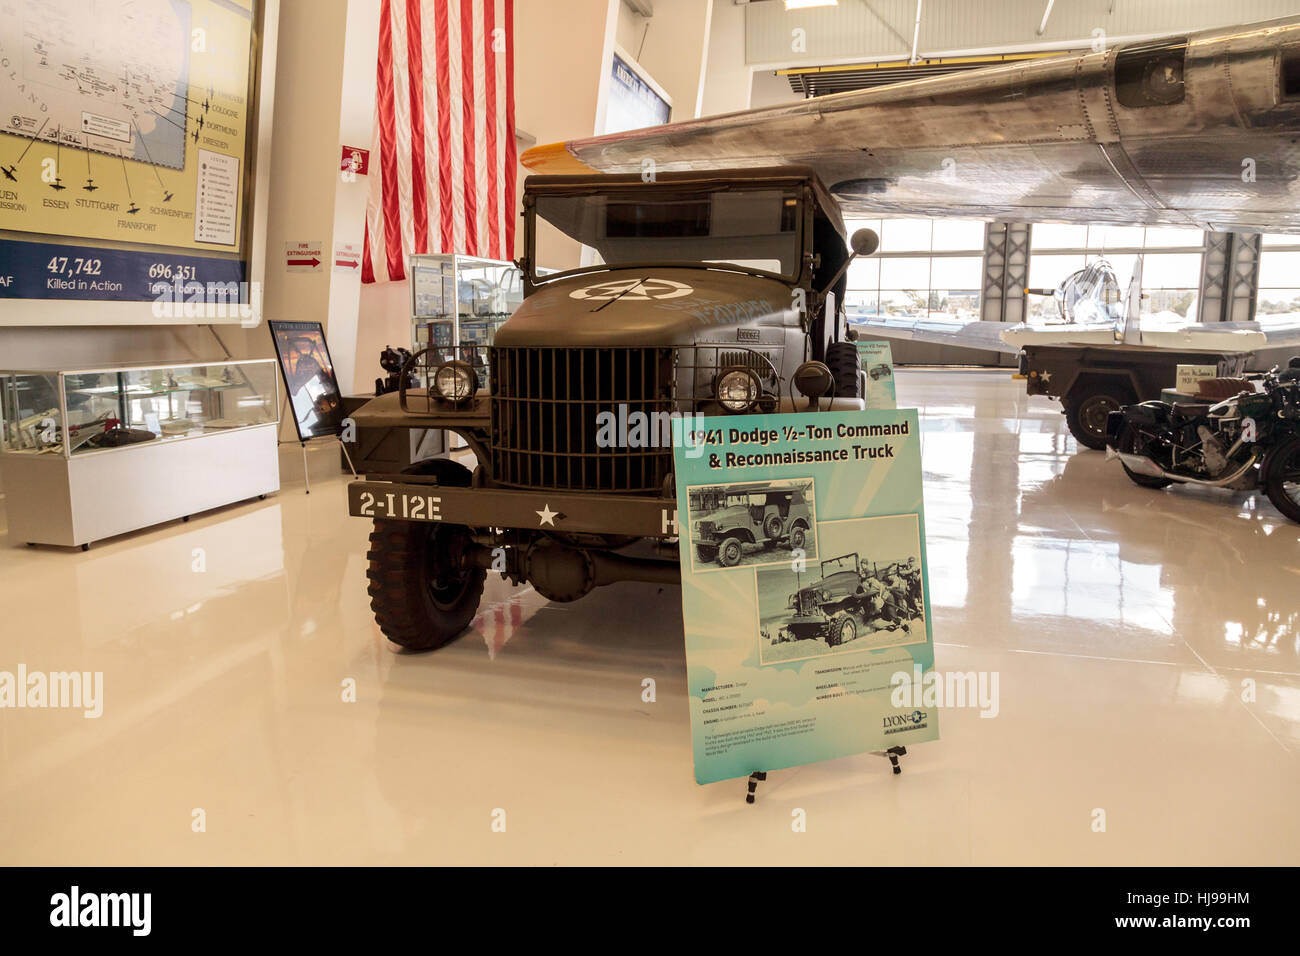 Santa Ana, CA, USA - January 21, 2017: Army Green 1941 Dodge half-ton command and reconnaissance truck displayed at the Lyon Air Stock Photo